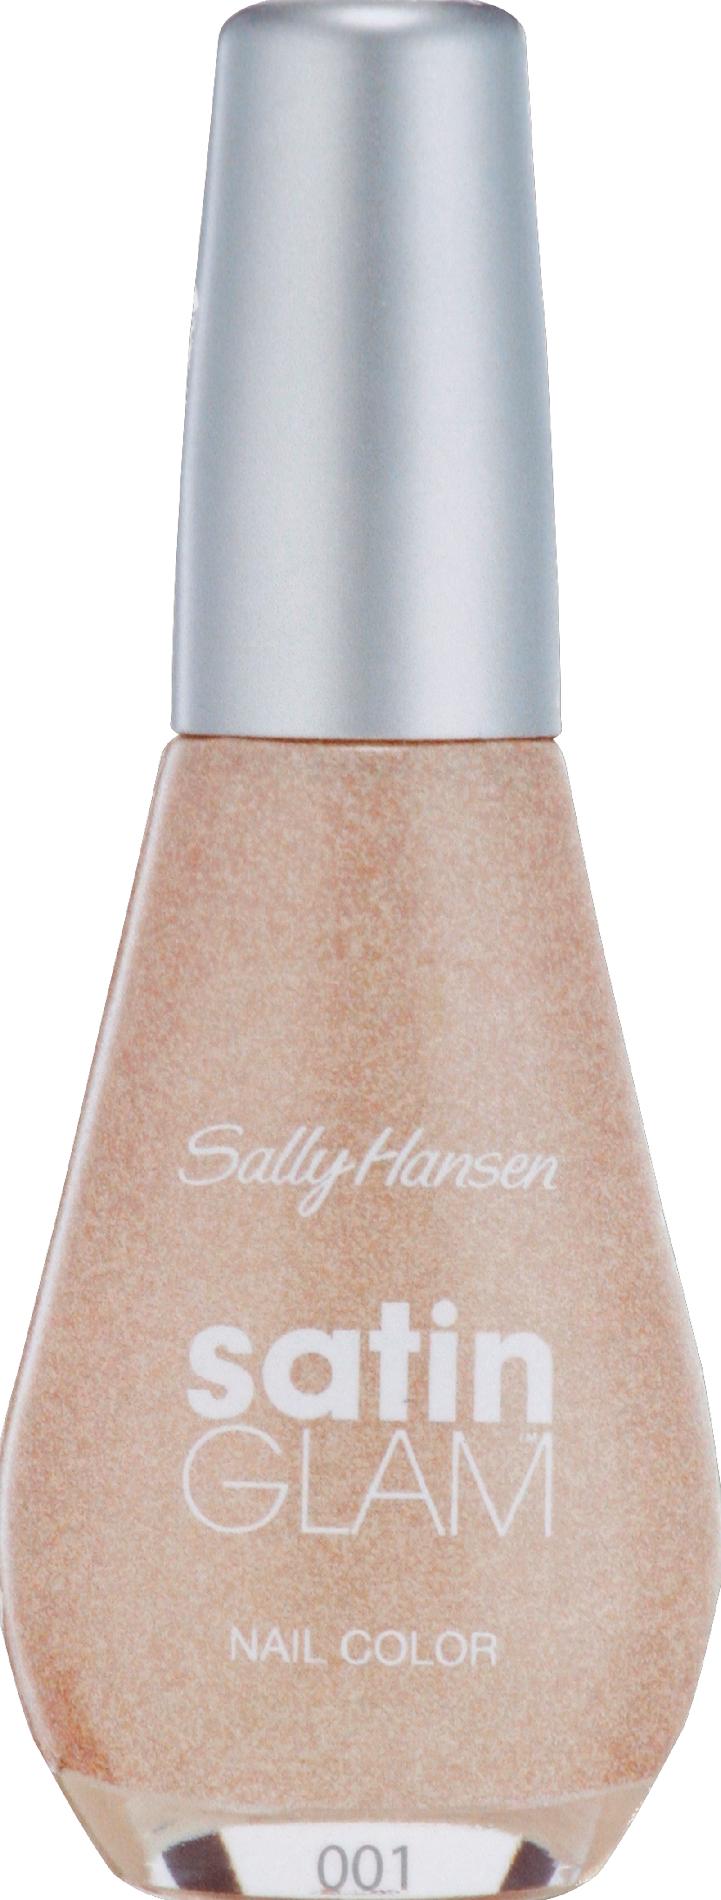 Sally Hansen Salon Effects, Satin Glam Nail Color ~ Go Gold 01, 0.33 fl oz.